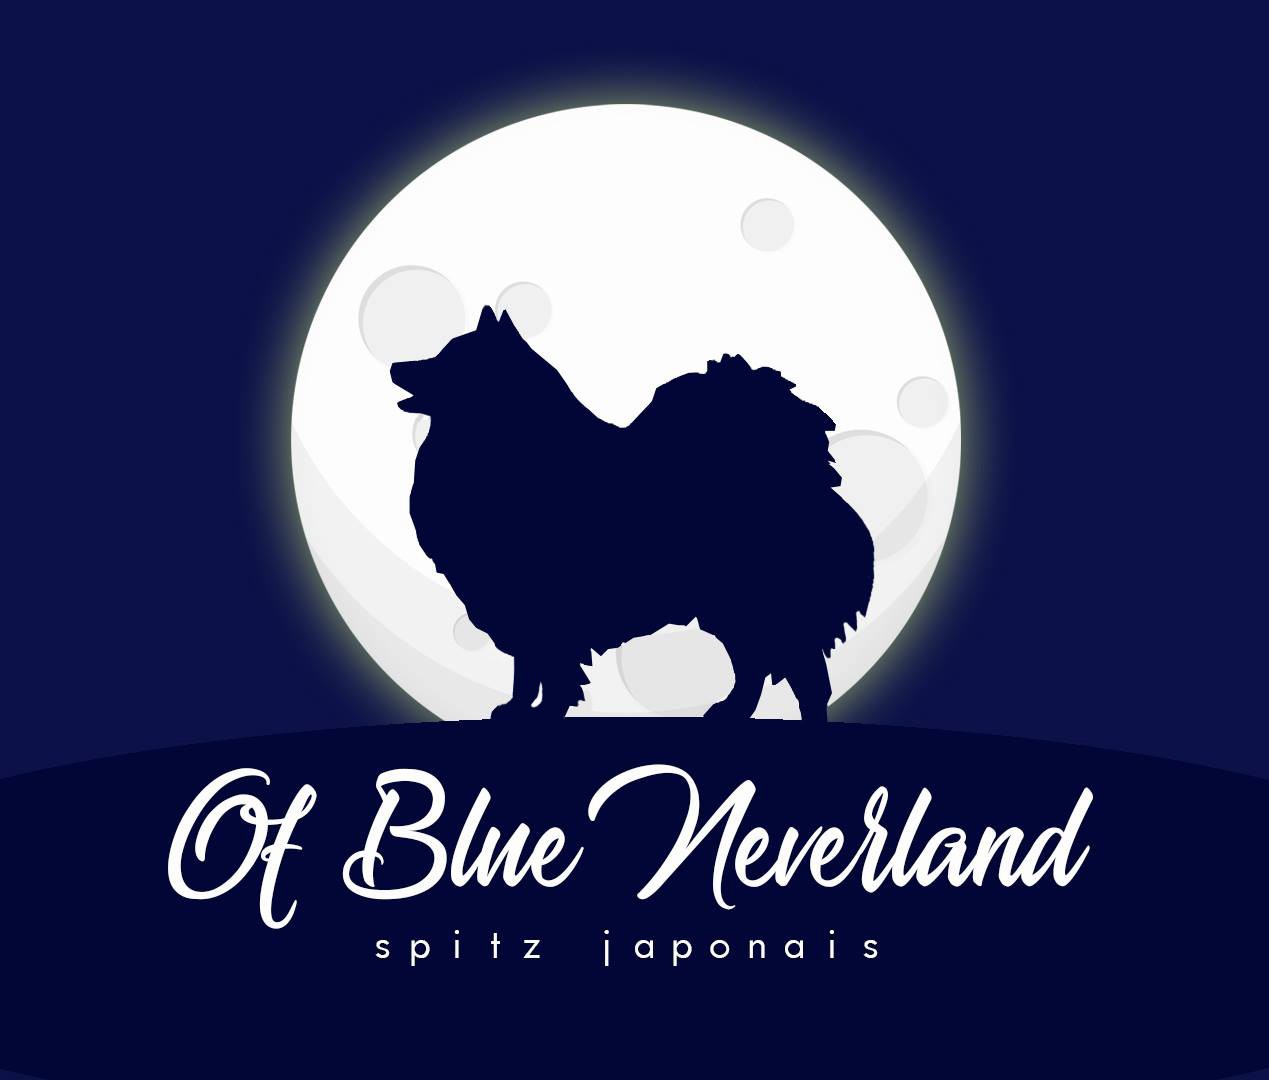 Of Blue Neverland